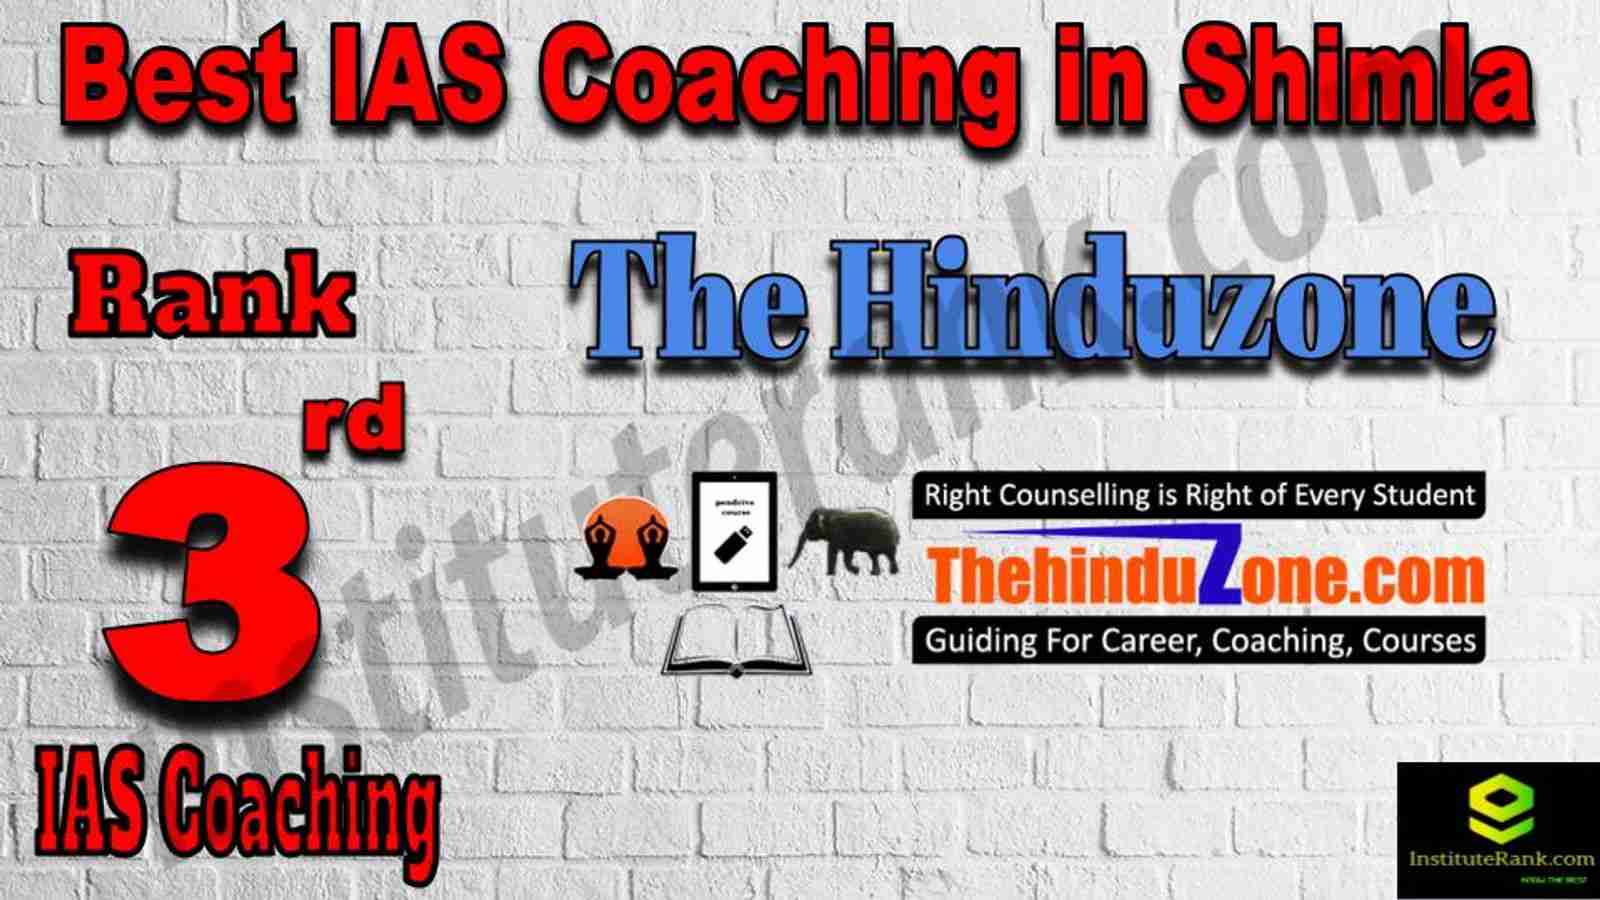 3rd Best IAS Coaching in Shimla